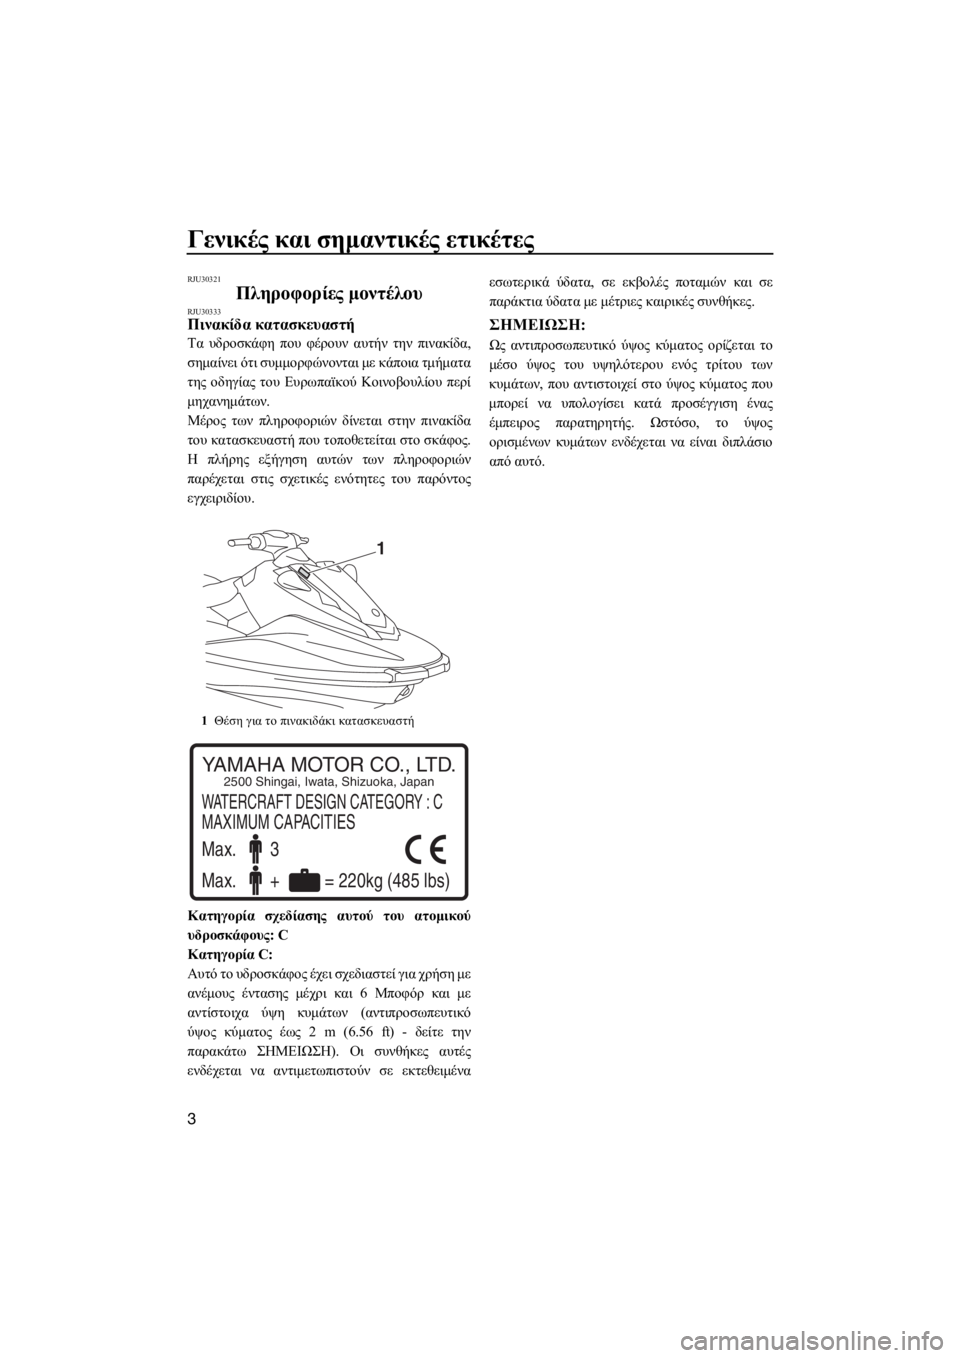 YAMAHA EX 2018  ΟΔΗΓΌΣ ΧΡΉΣΗΣ (in Greek) Γενικές και σημαντικές ετικέτες
3
RJU30321
Πληροφορίες μοντέλουRJU30333Πινακίδα κατασκευαστή
Τα υδροσκάφη που φέρο�